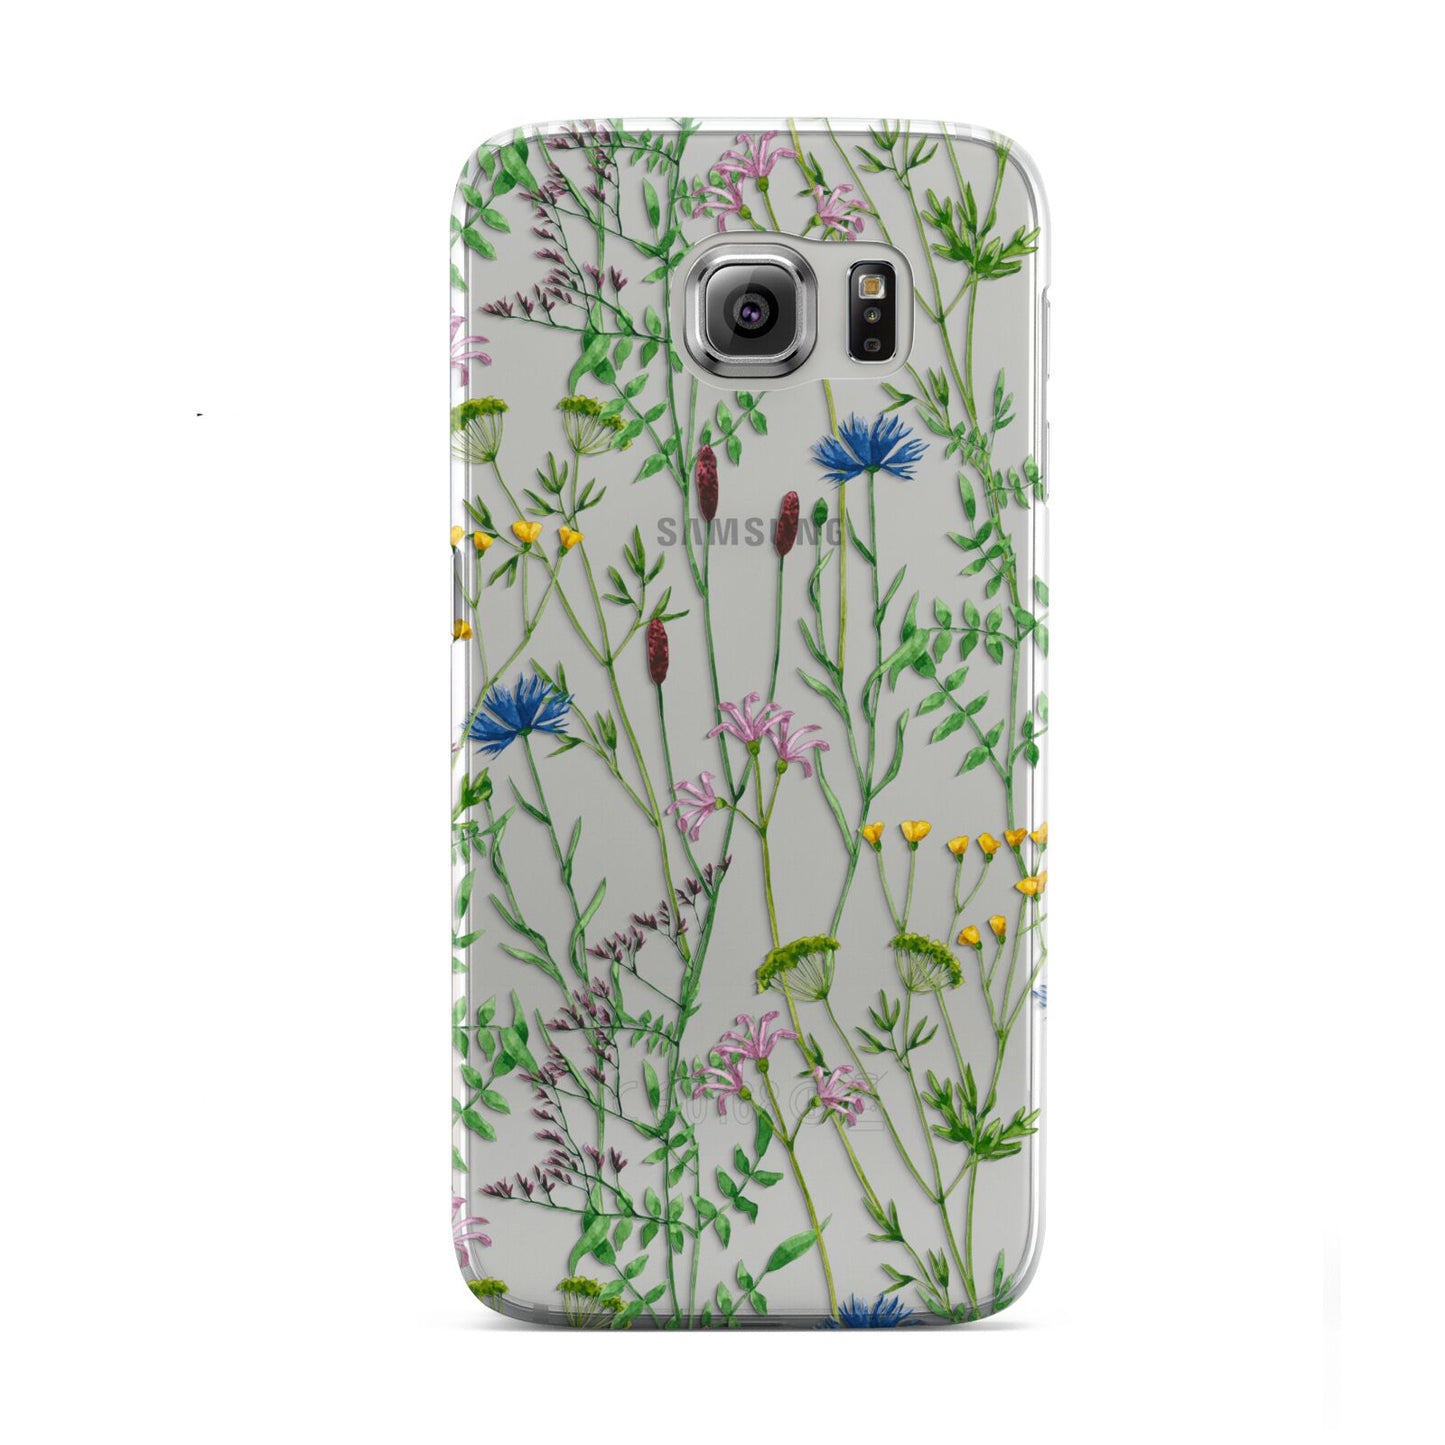 Wildflowers Samsung Galaxy S6 Case